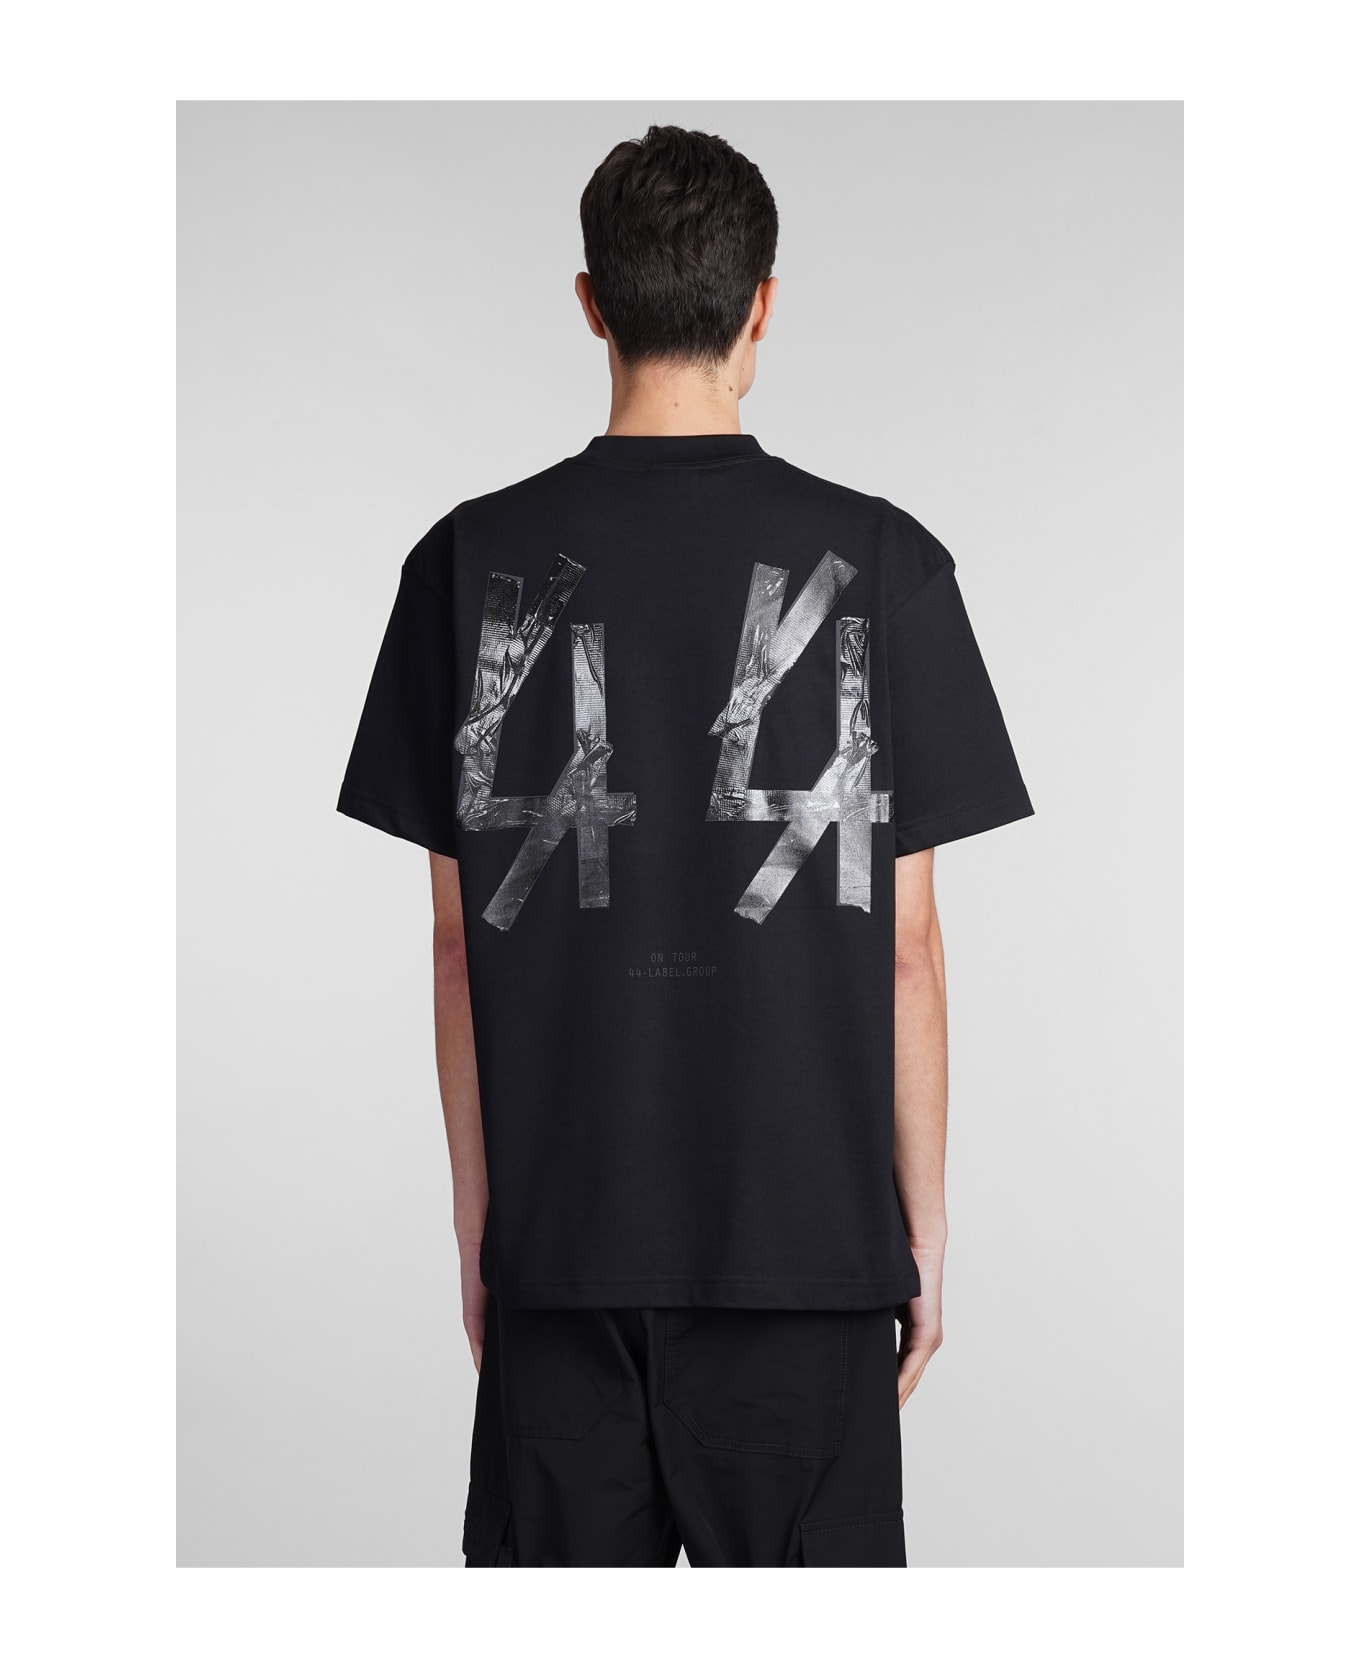 44 Label Group T-shirt In Black Cotton - black